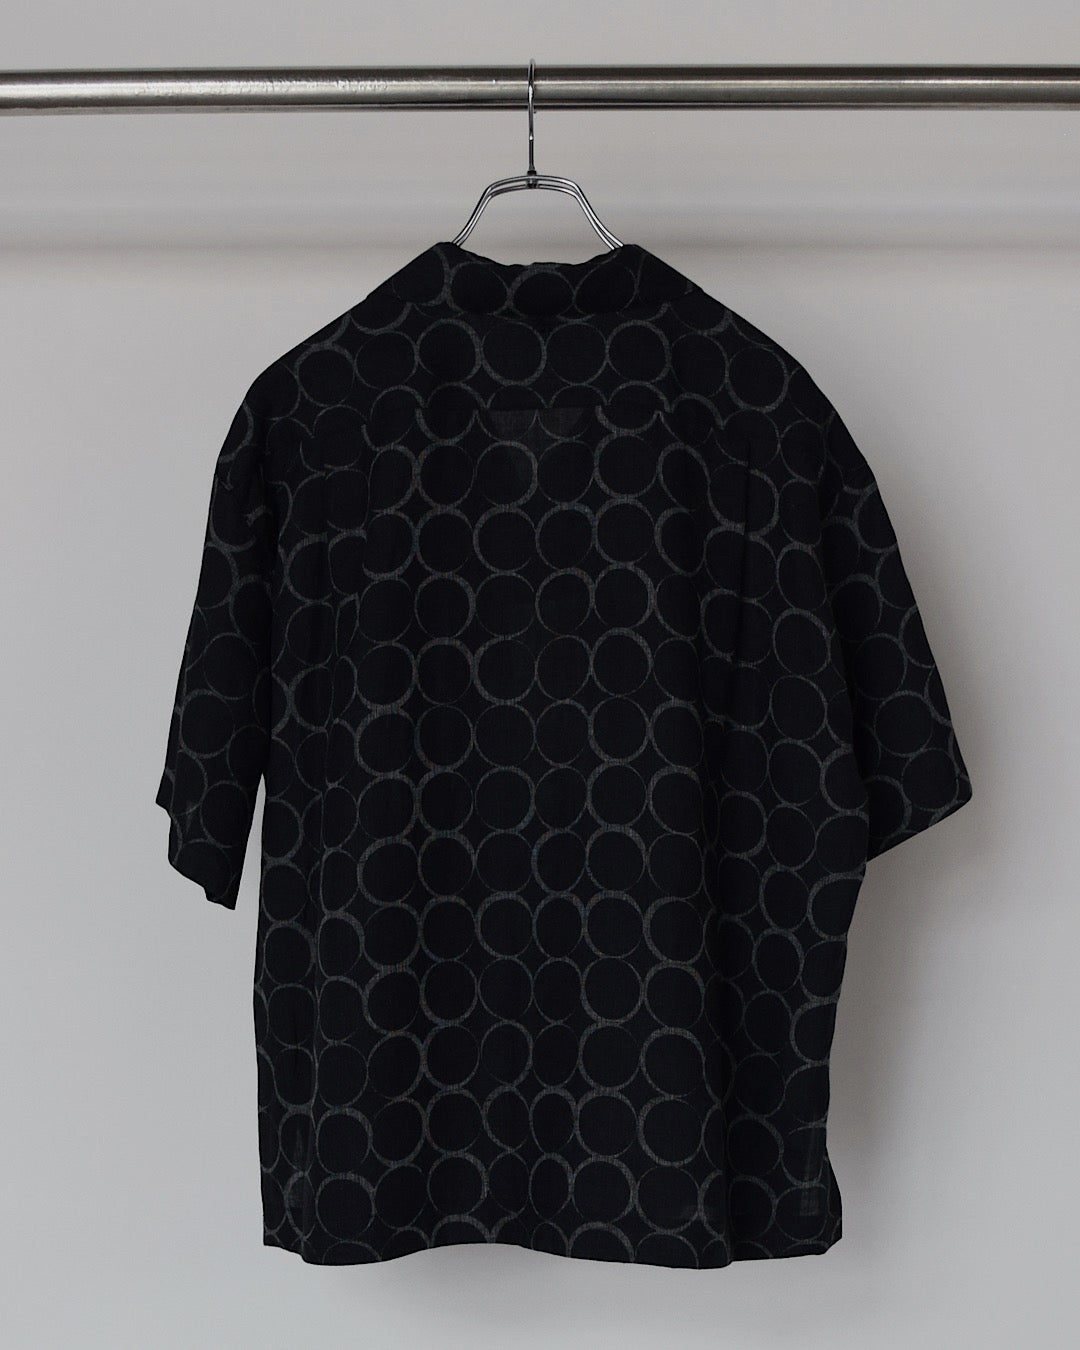 satou / "engawa skipper shirt" - black